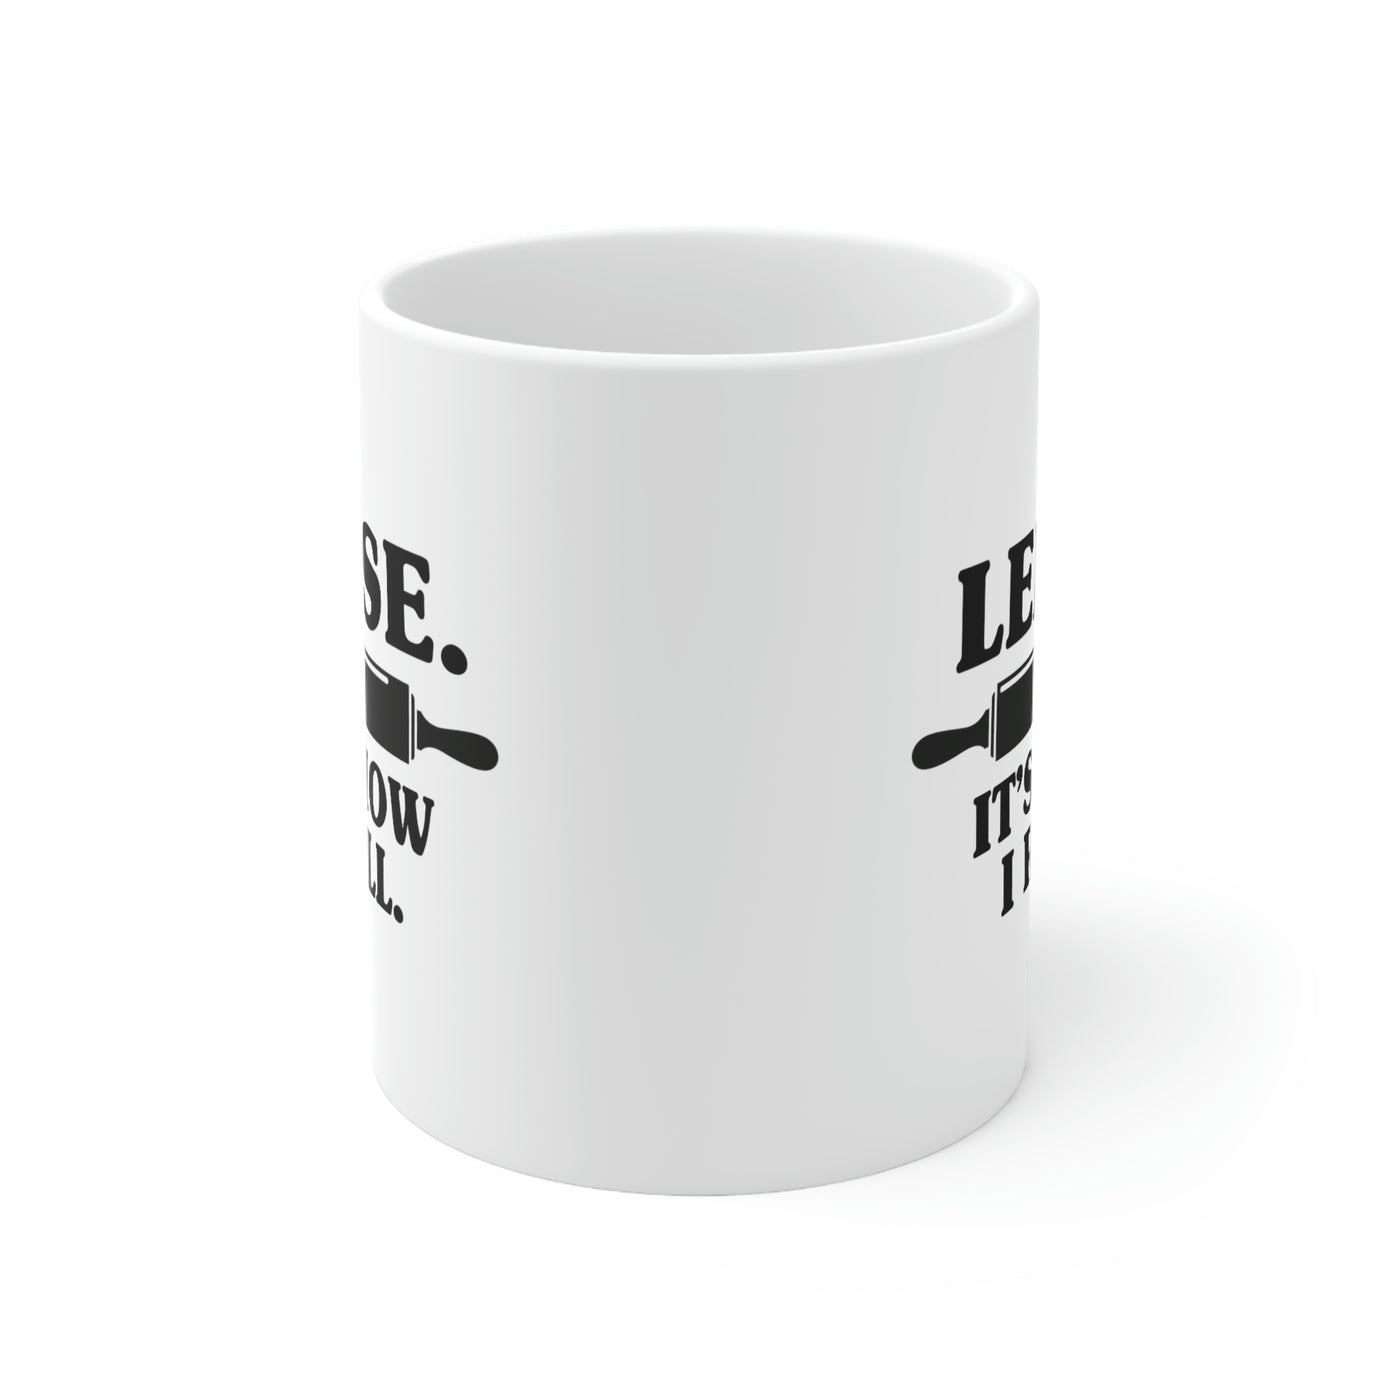 Lefse It's How I Roll Mug Scandinavian Design Studio